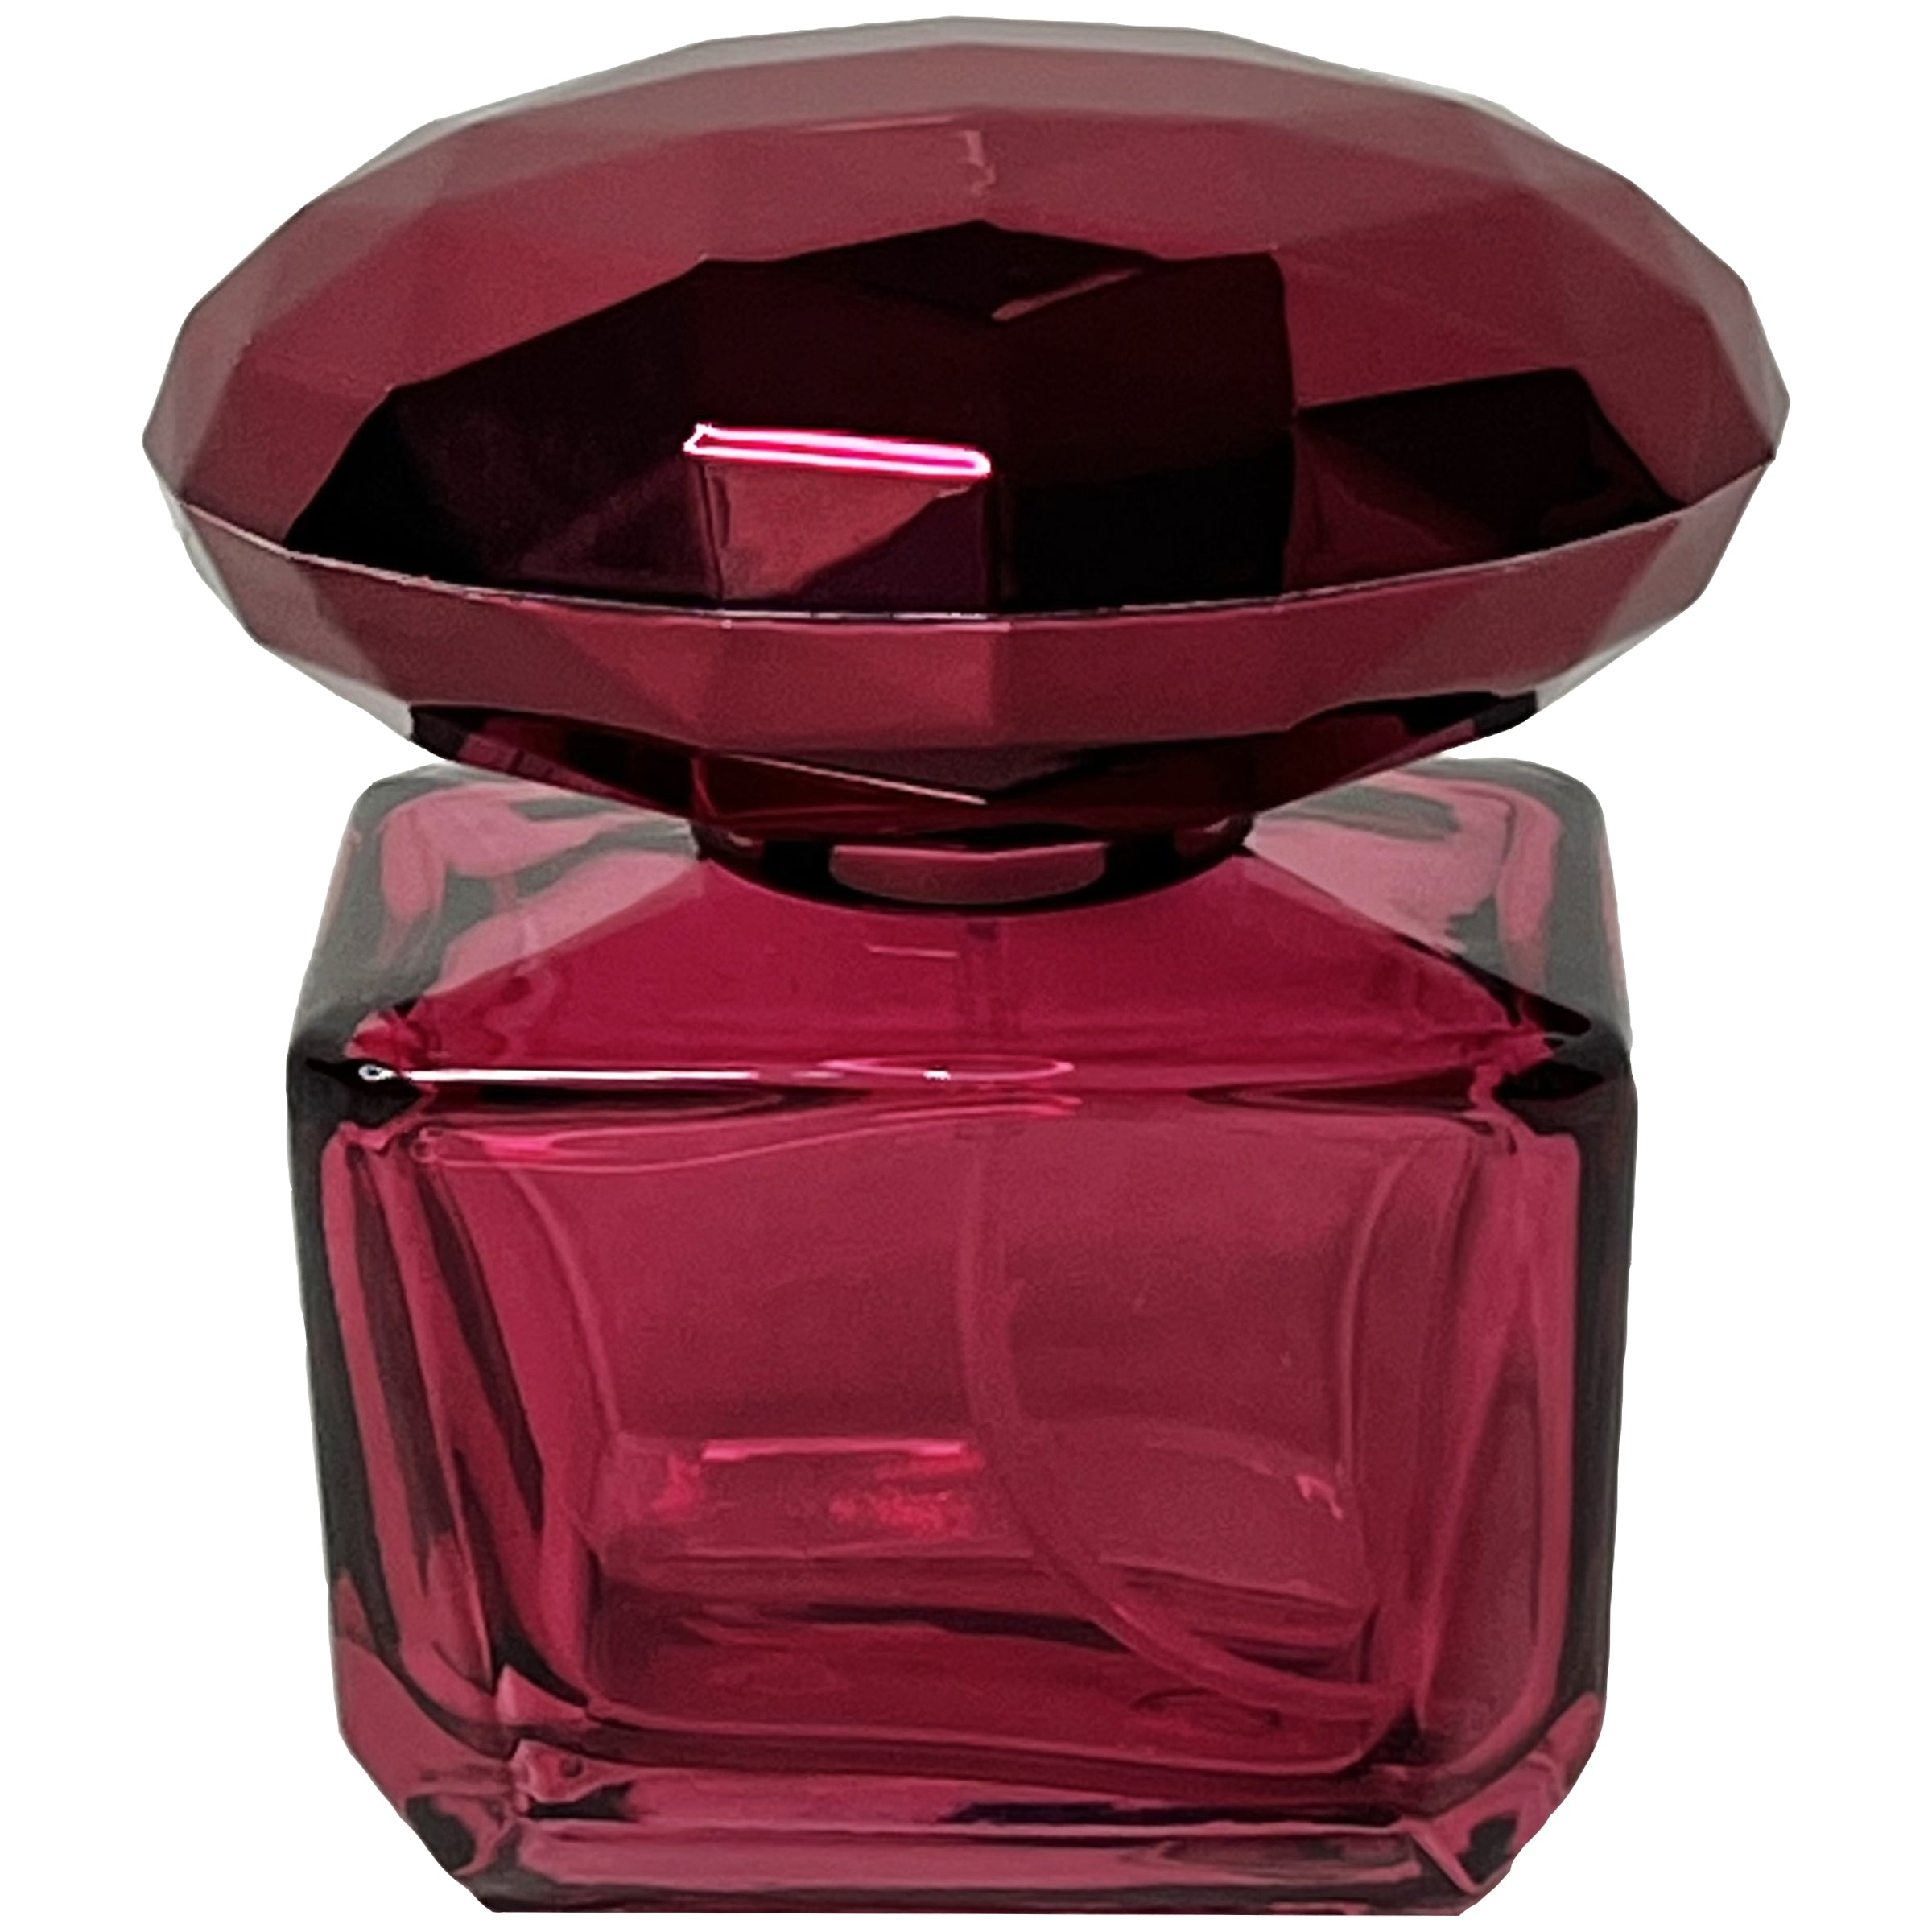 30ml 1oz 3 colors glass gemstone lids perfume spray bottles